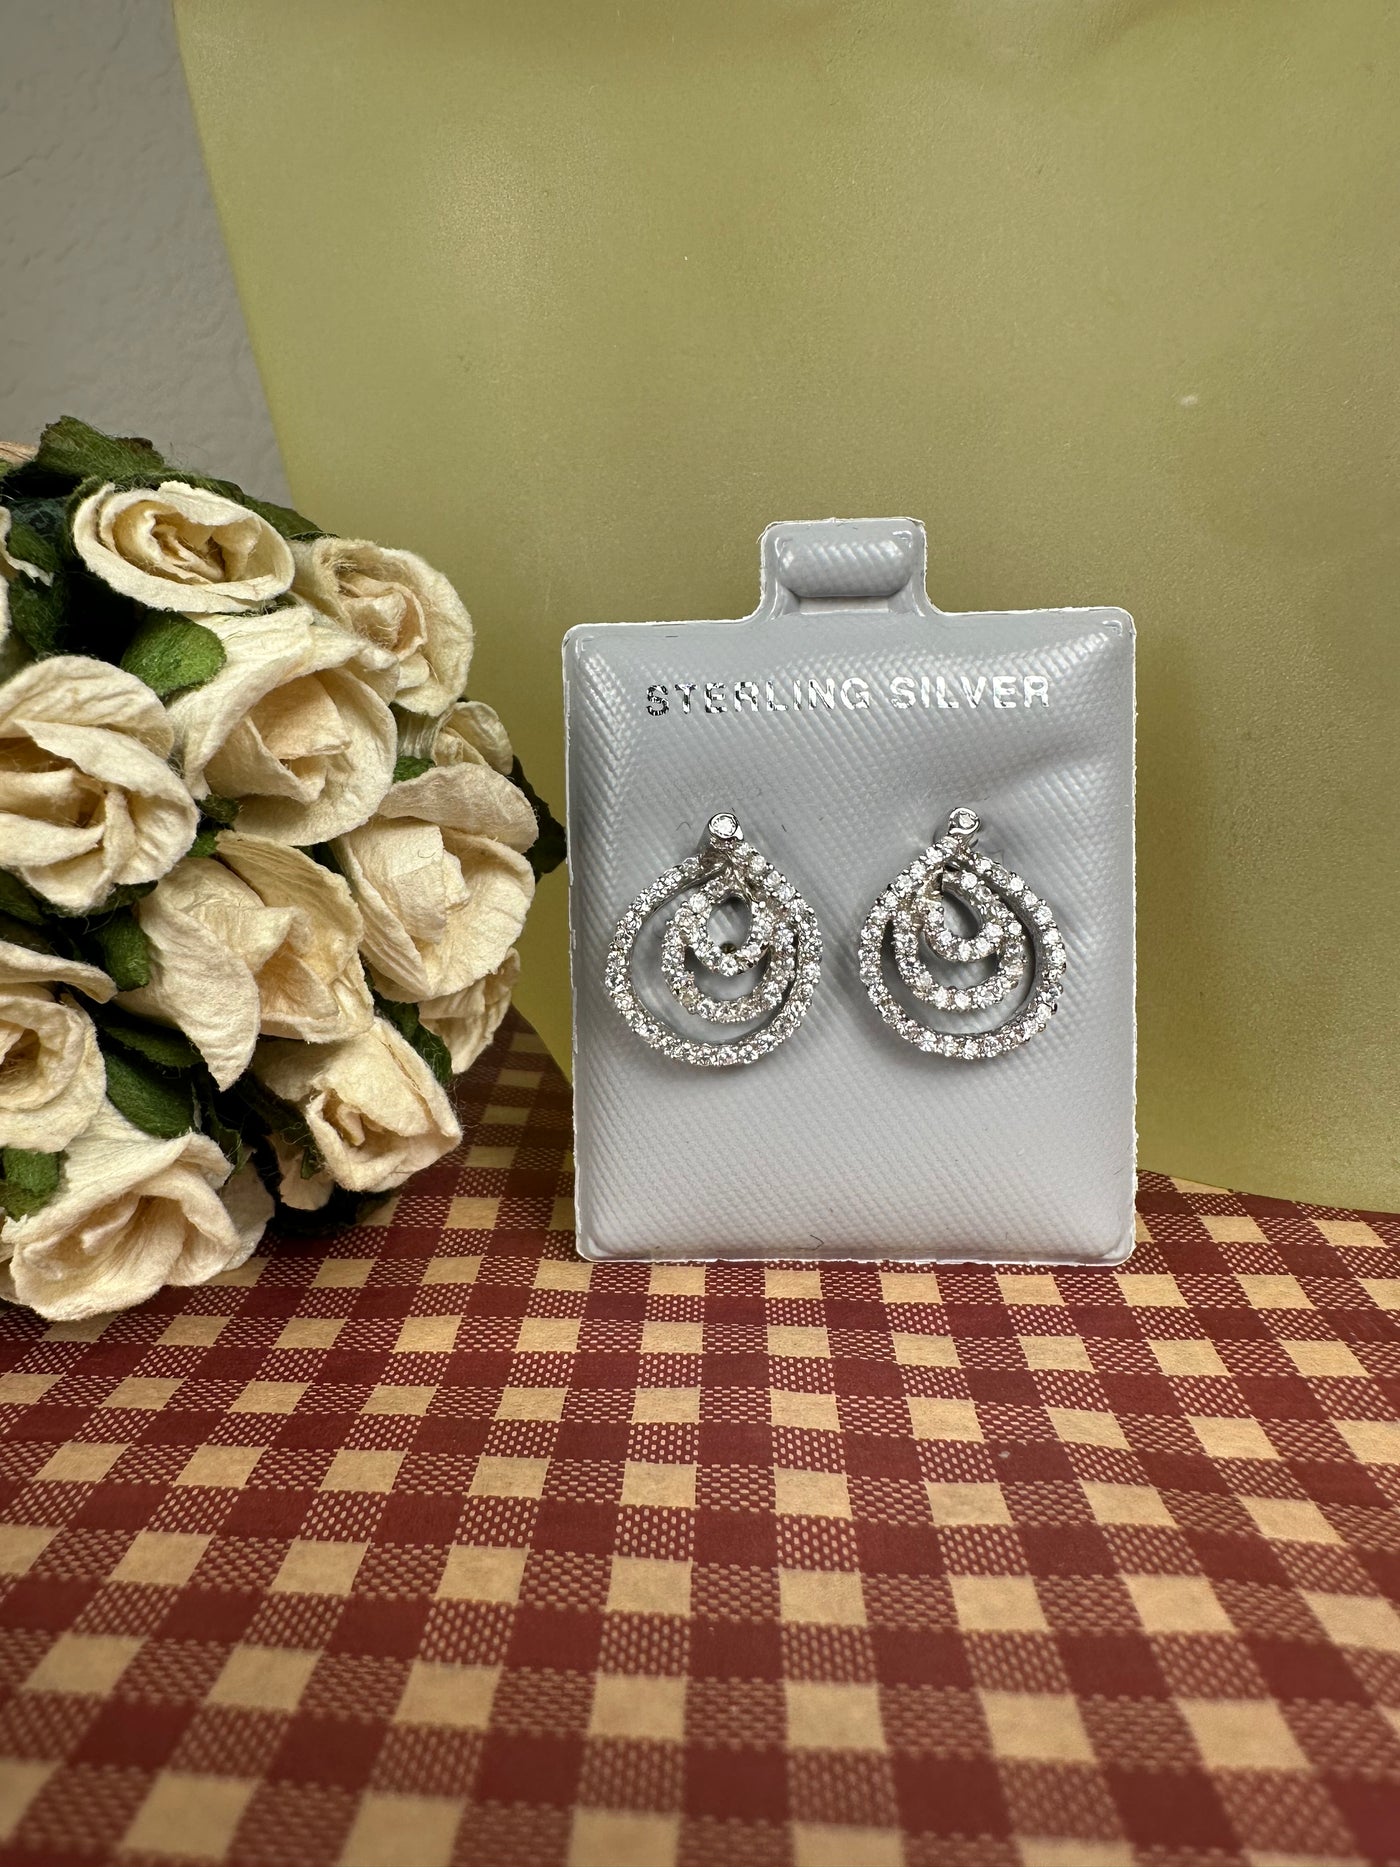 3 Loops Sterling Silver & Cubic Zirconia CZs Earrings on Post